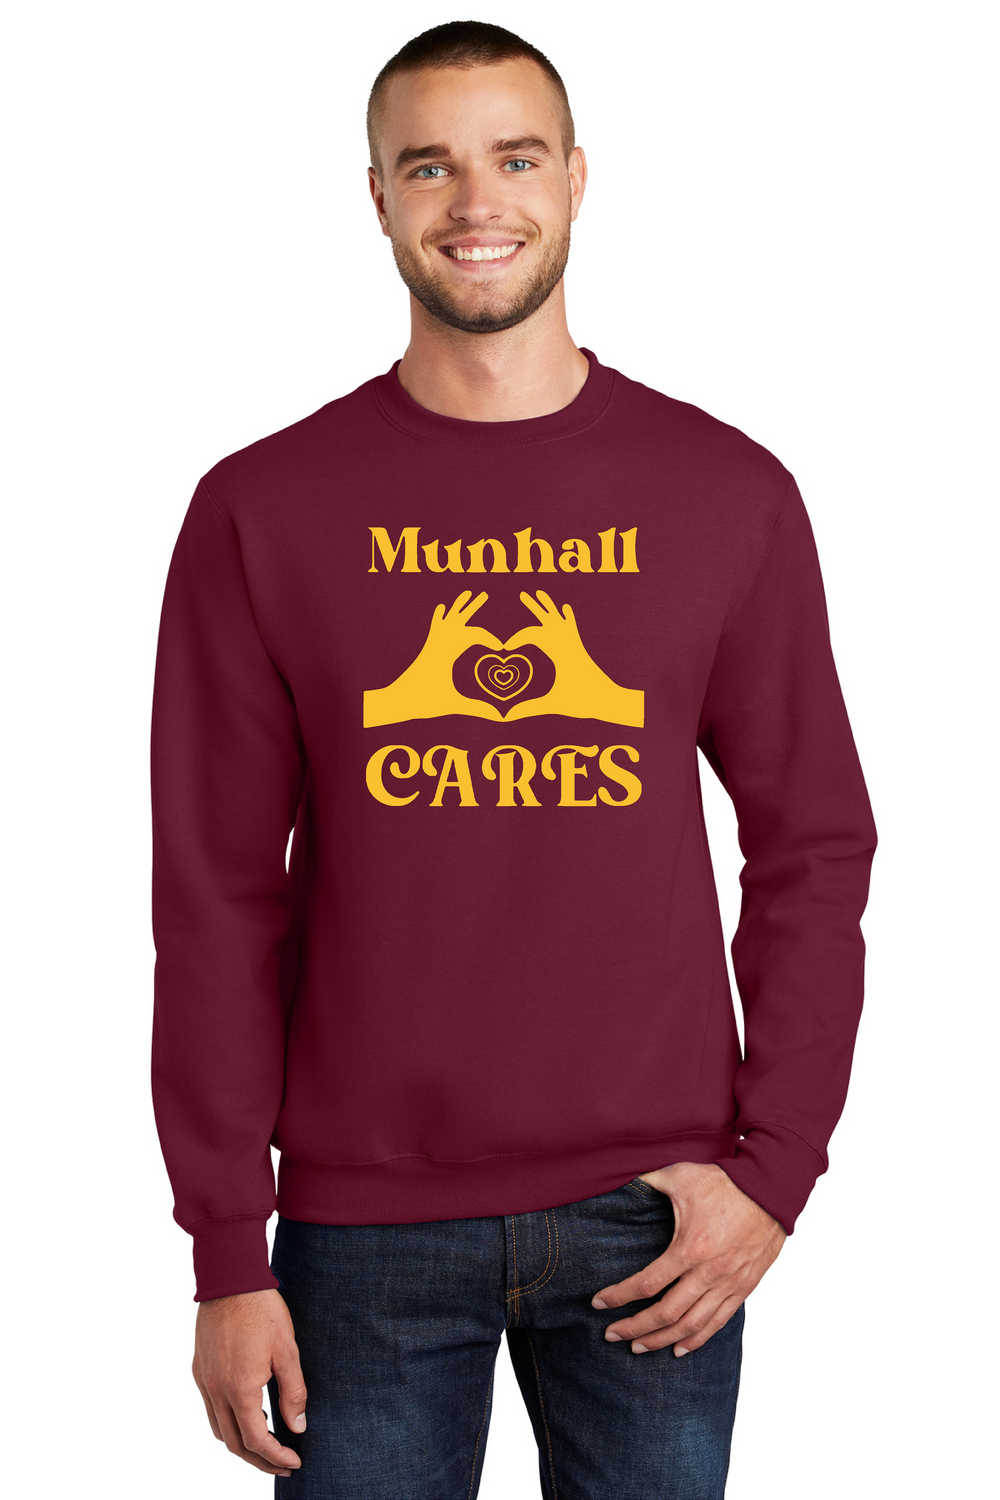 Munhall Cares crewneck sweatshirt Sm-4XL